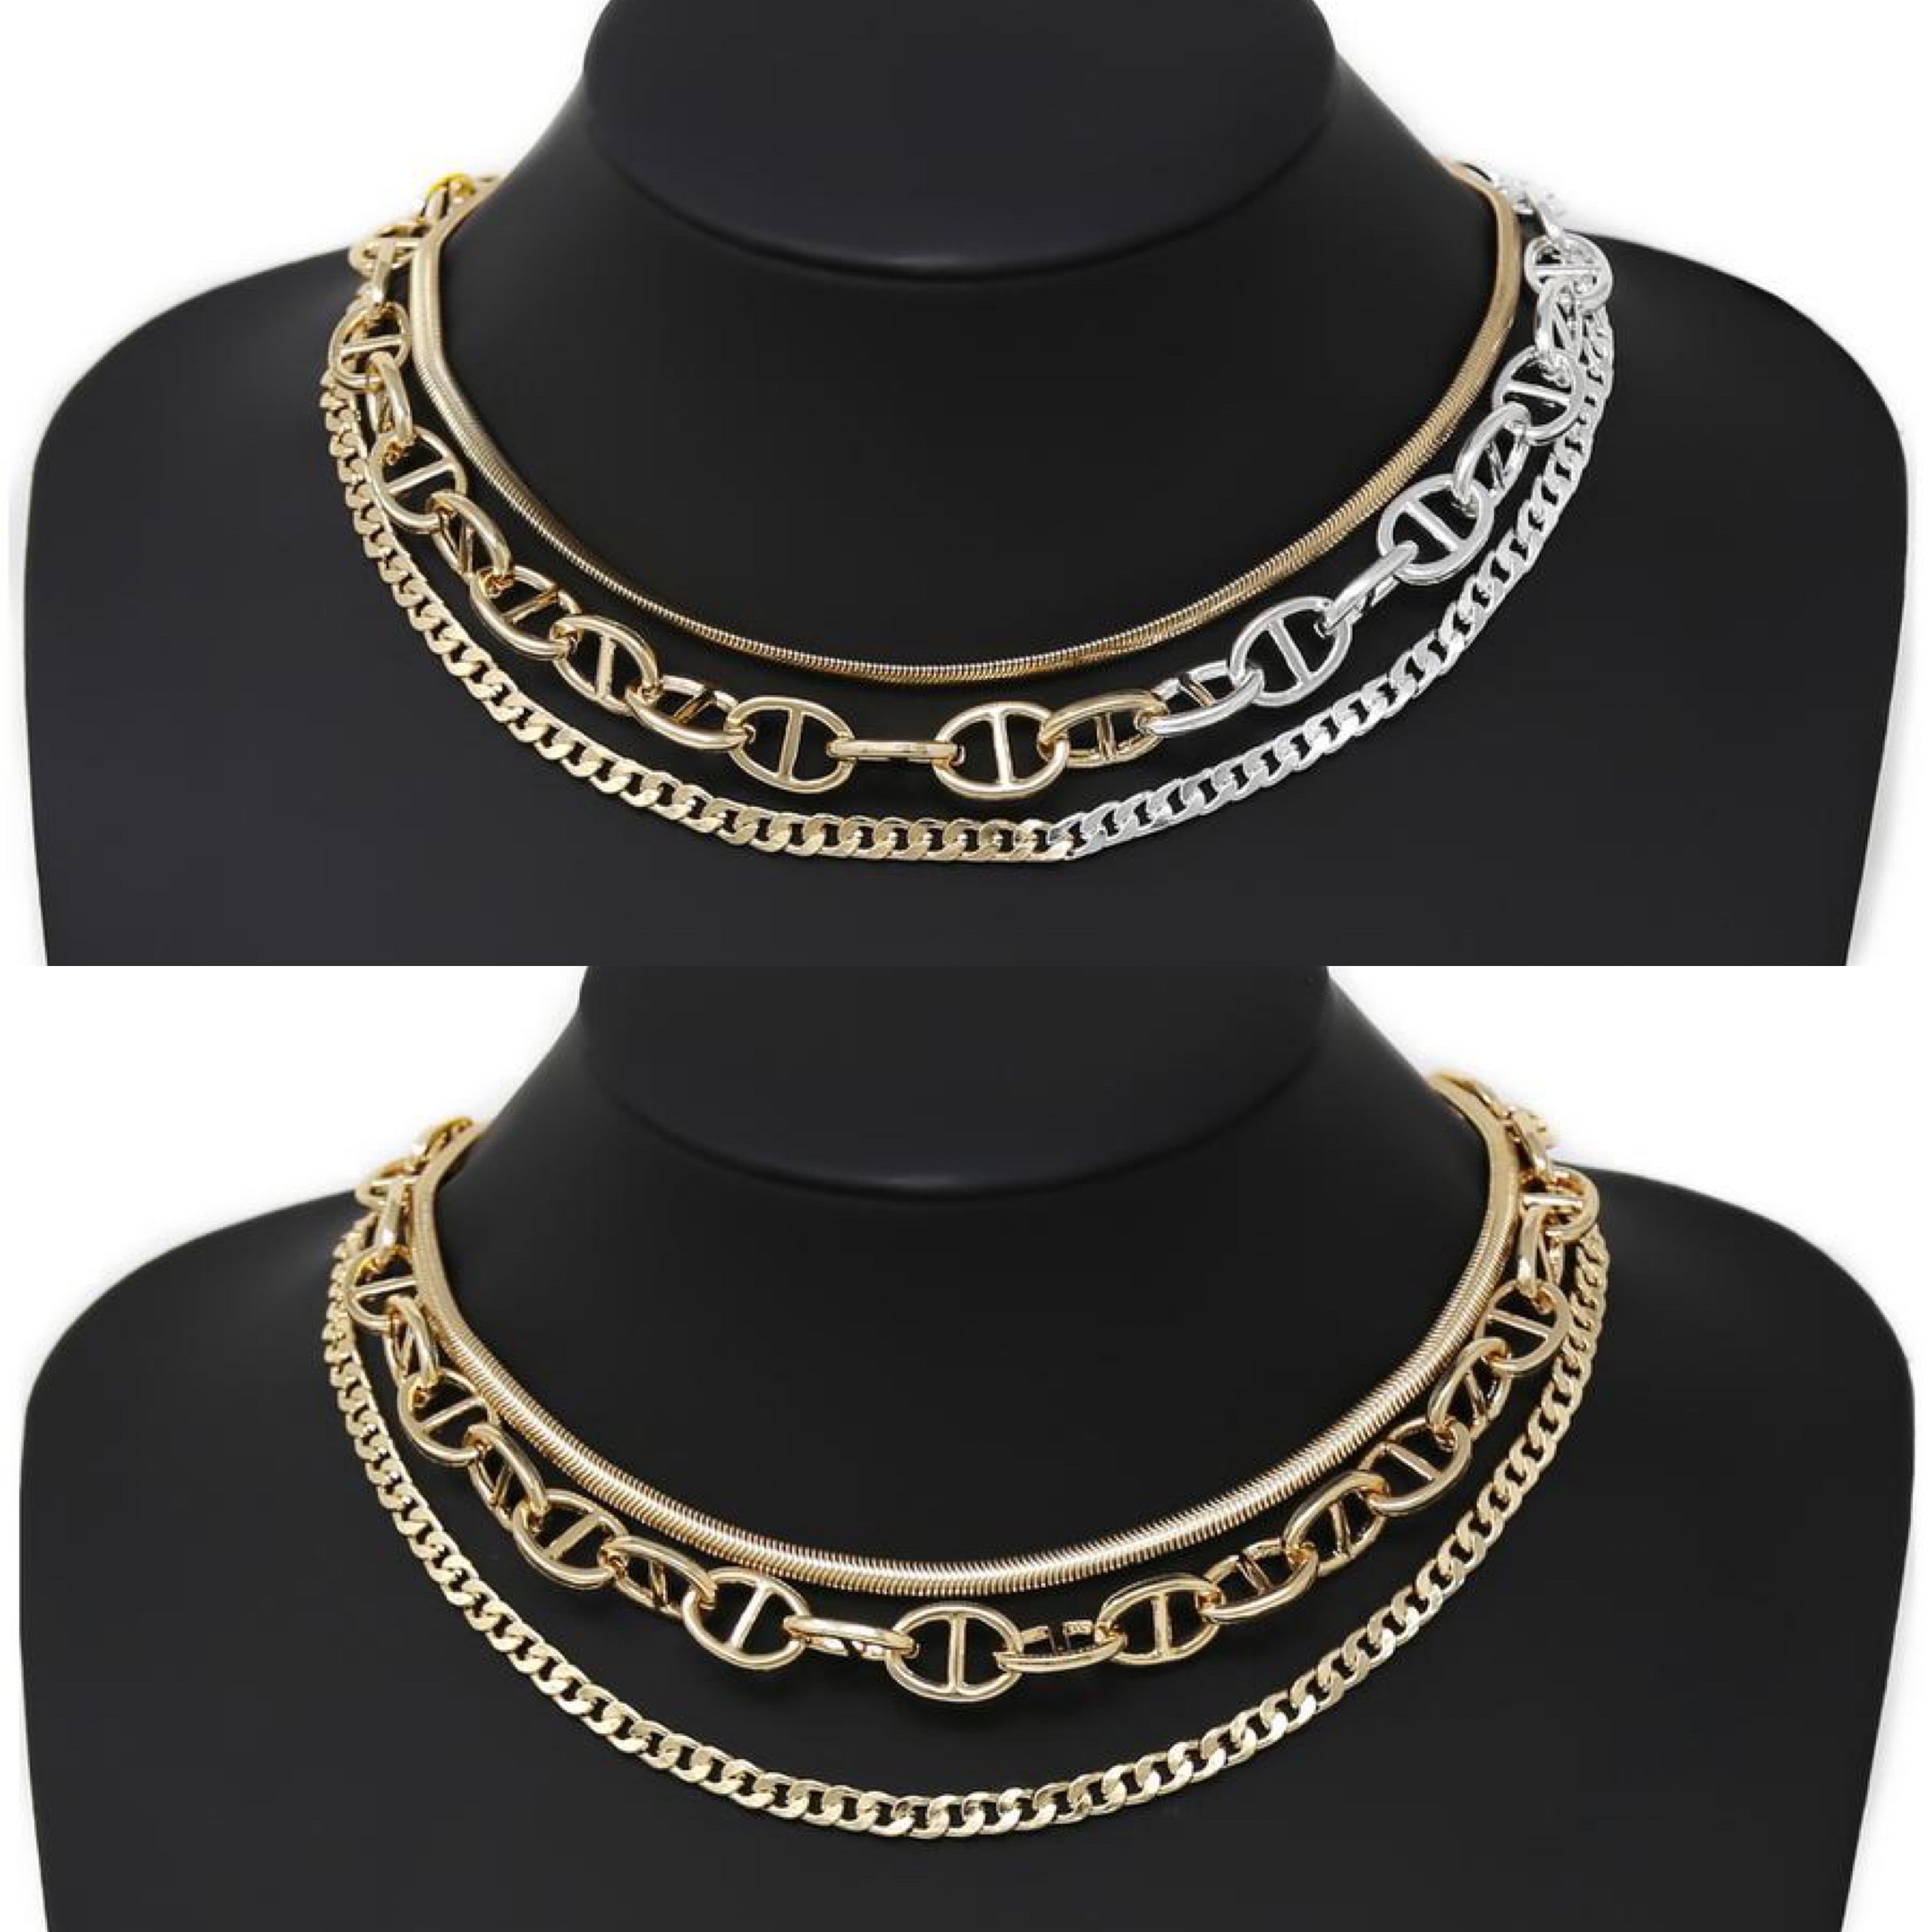 Designer inspired necklaces